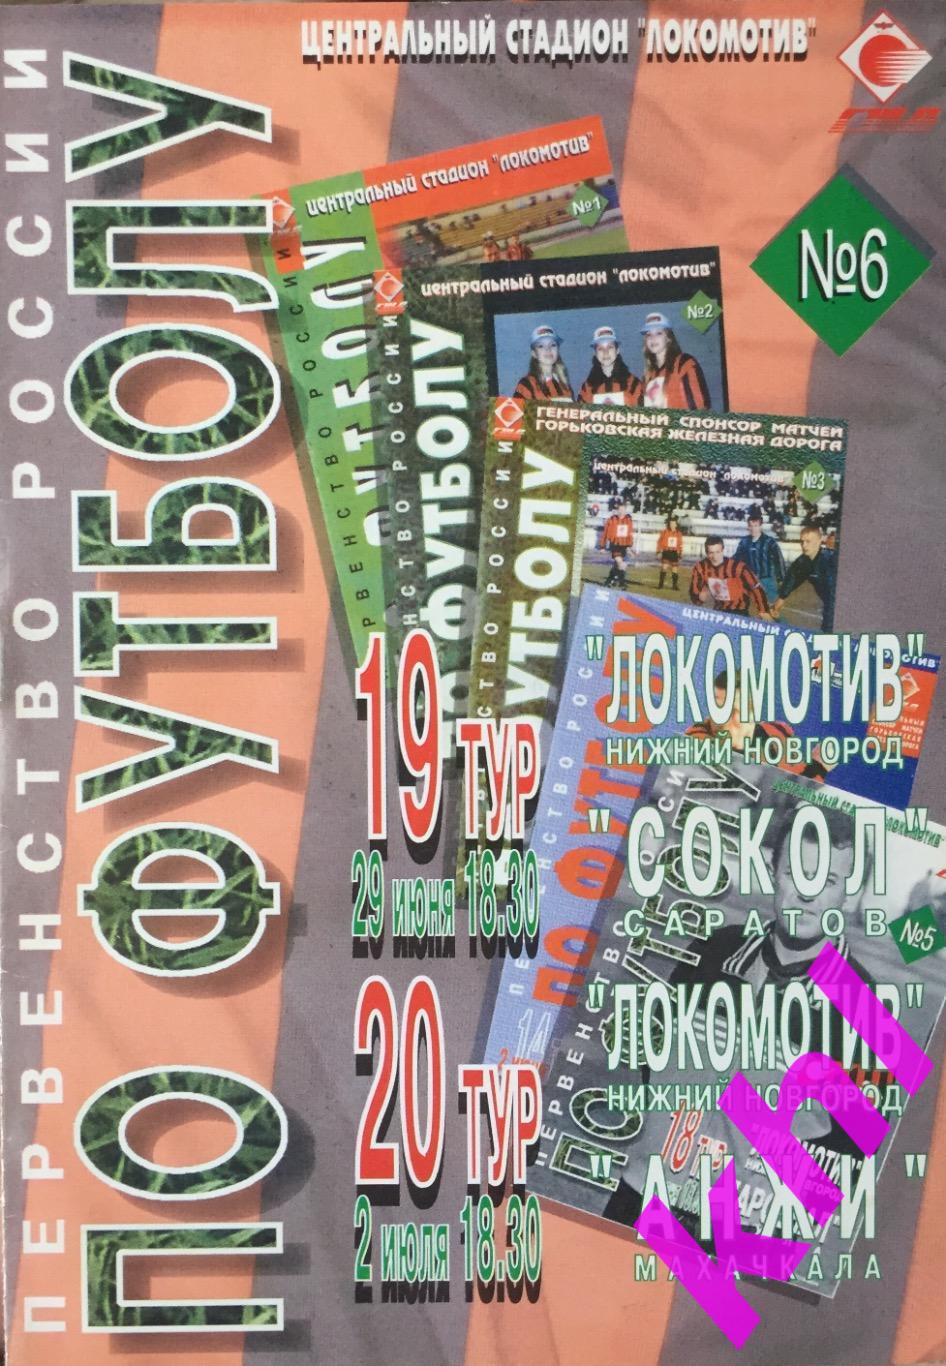 Локомотив Нижний Новгород - Сокол Саратов / Анжи Махачкала июнь-июль 1998